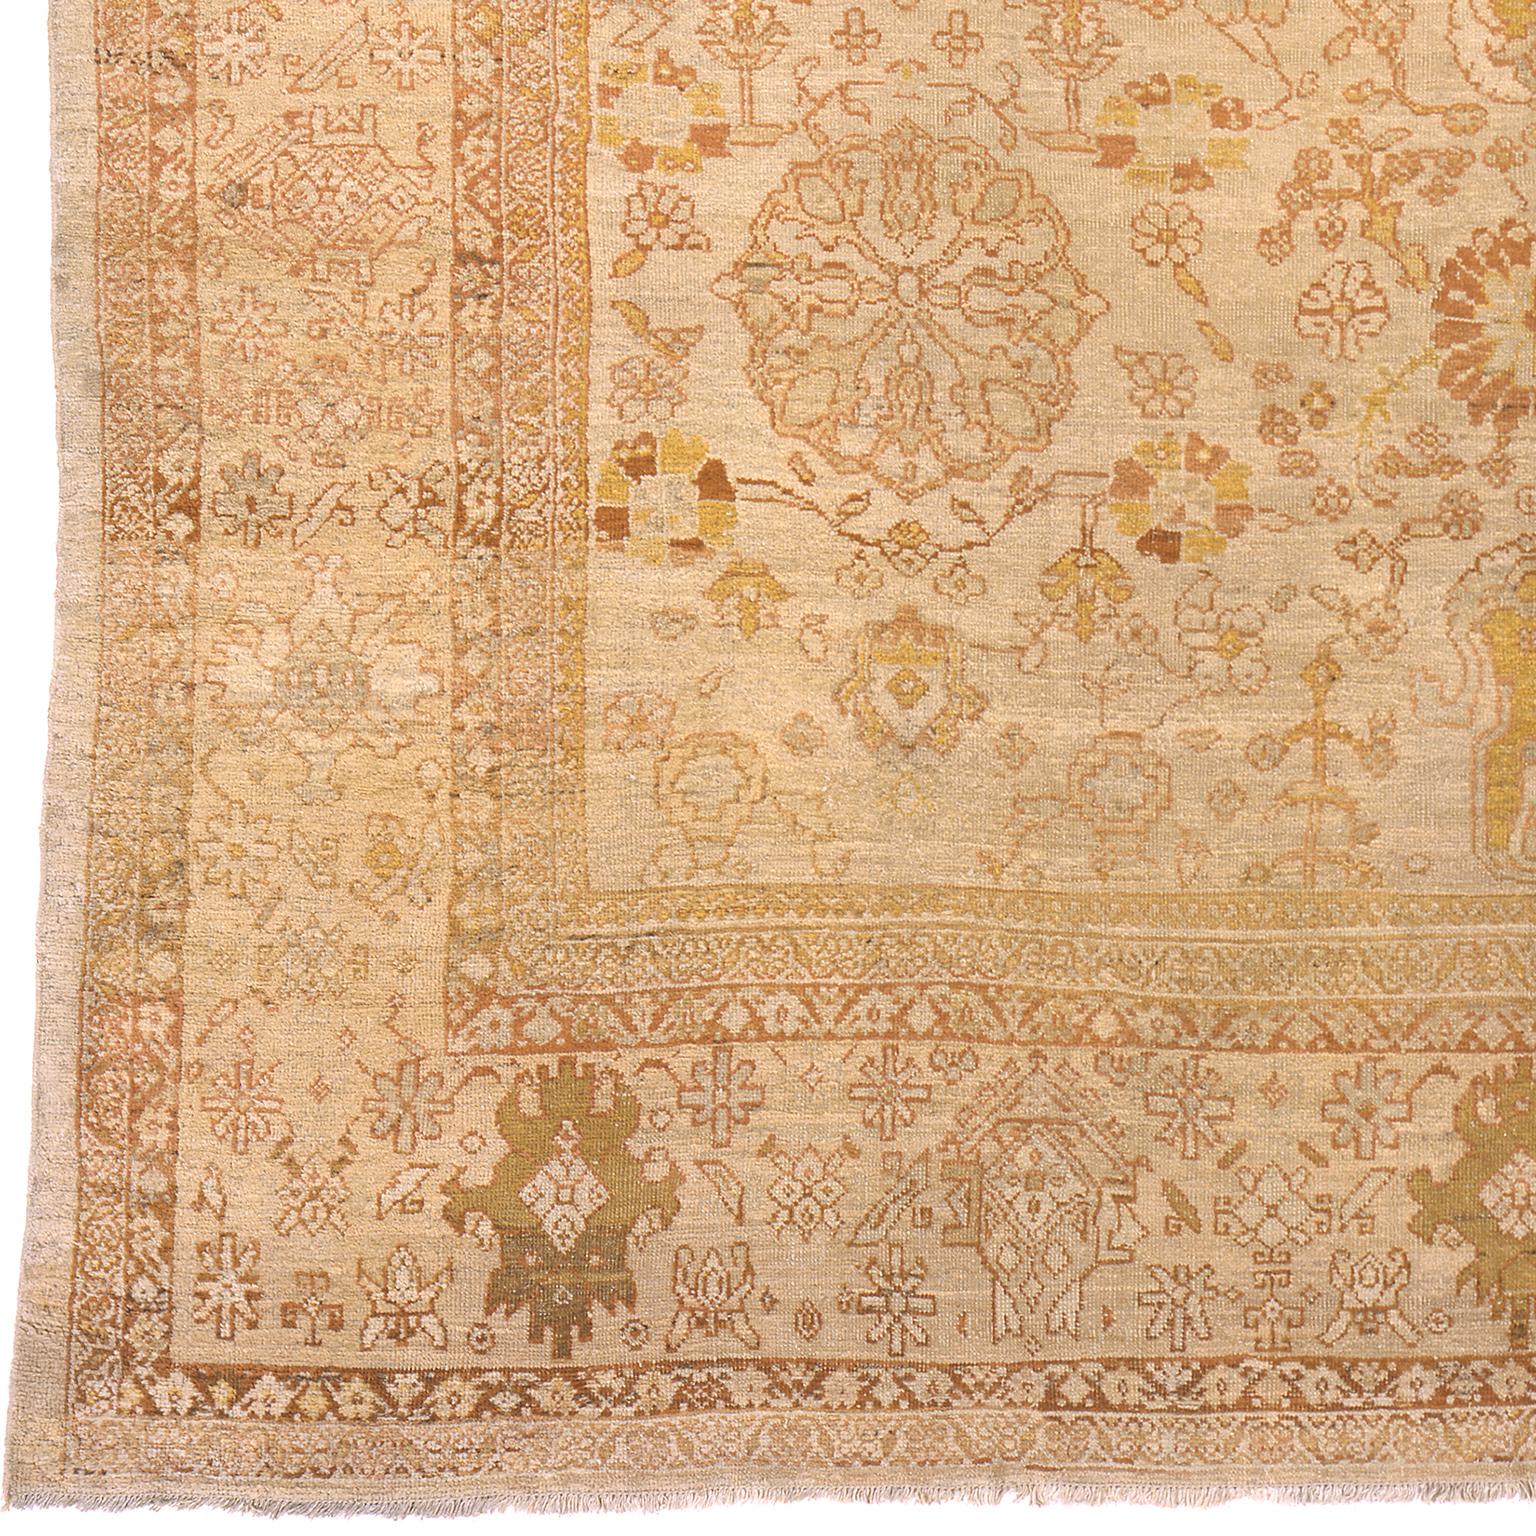 Antiker persischer Ziegler Sultanabad-Teppich
Persien, um 1880
Handgewebt.
     